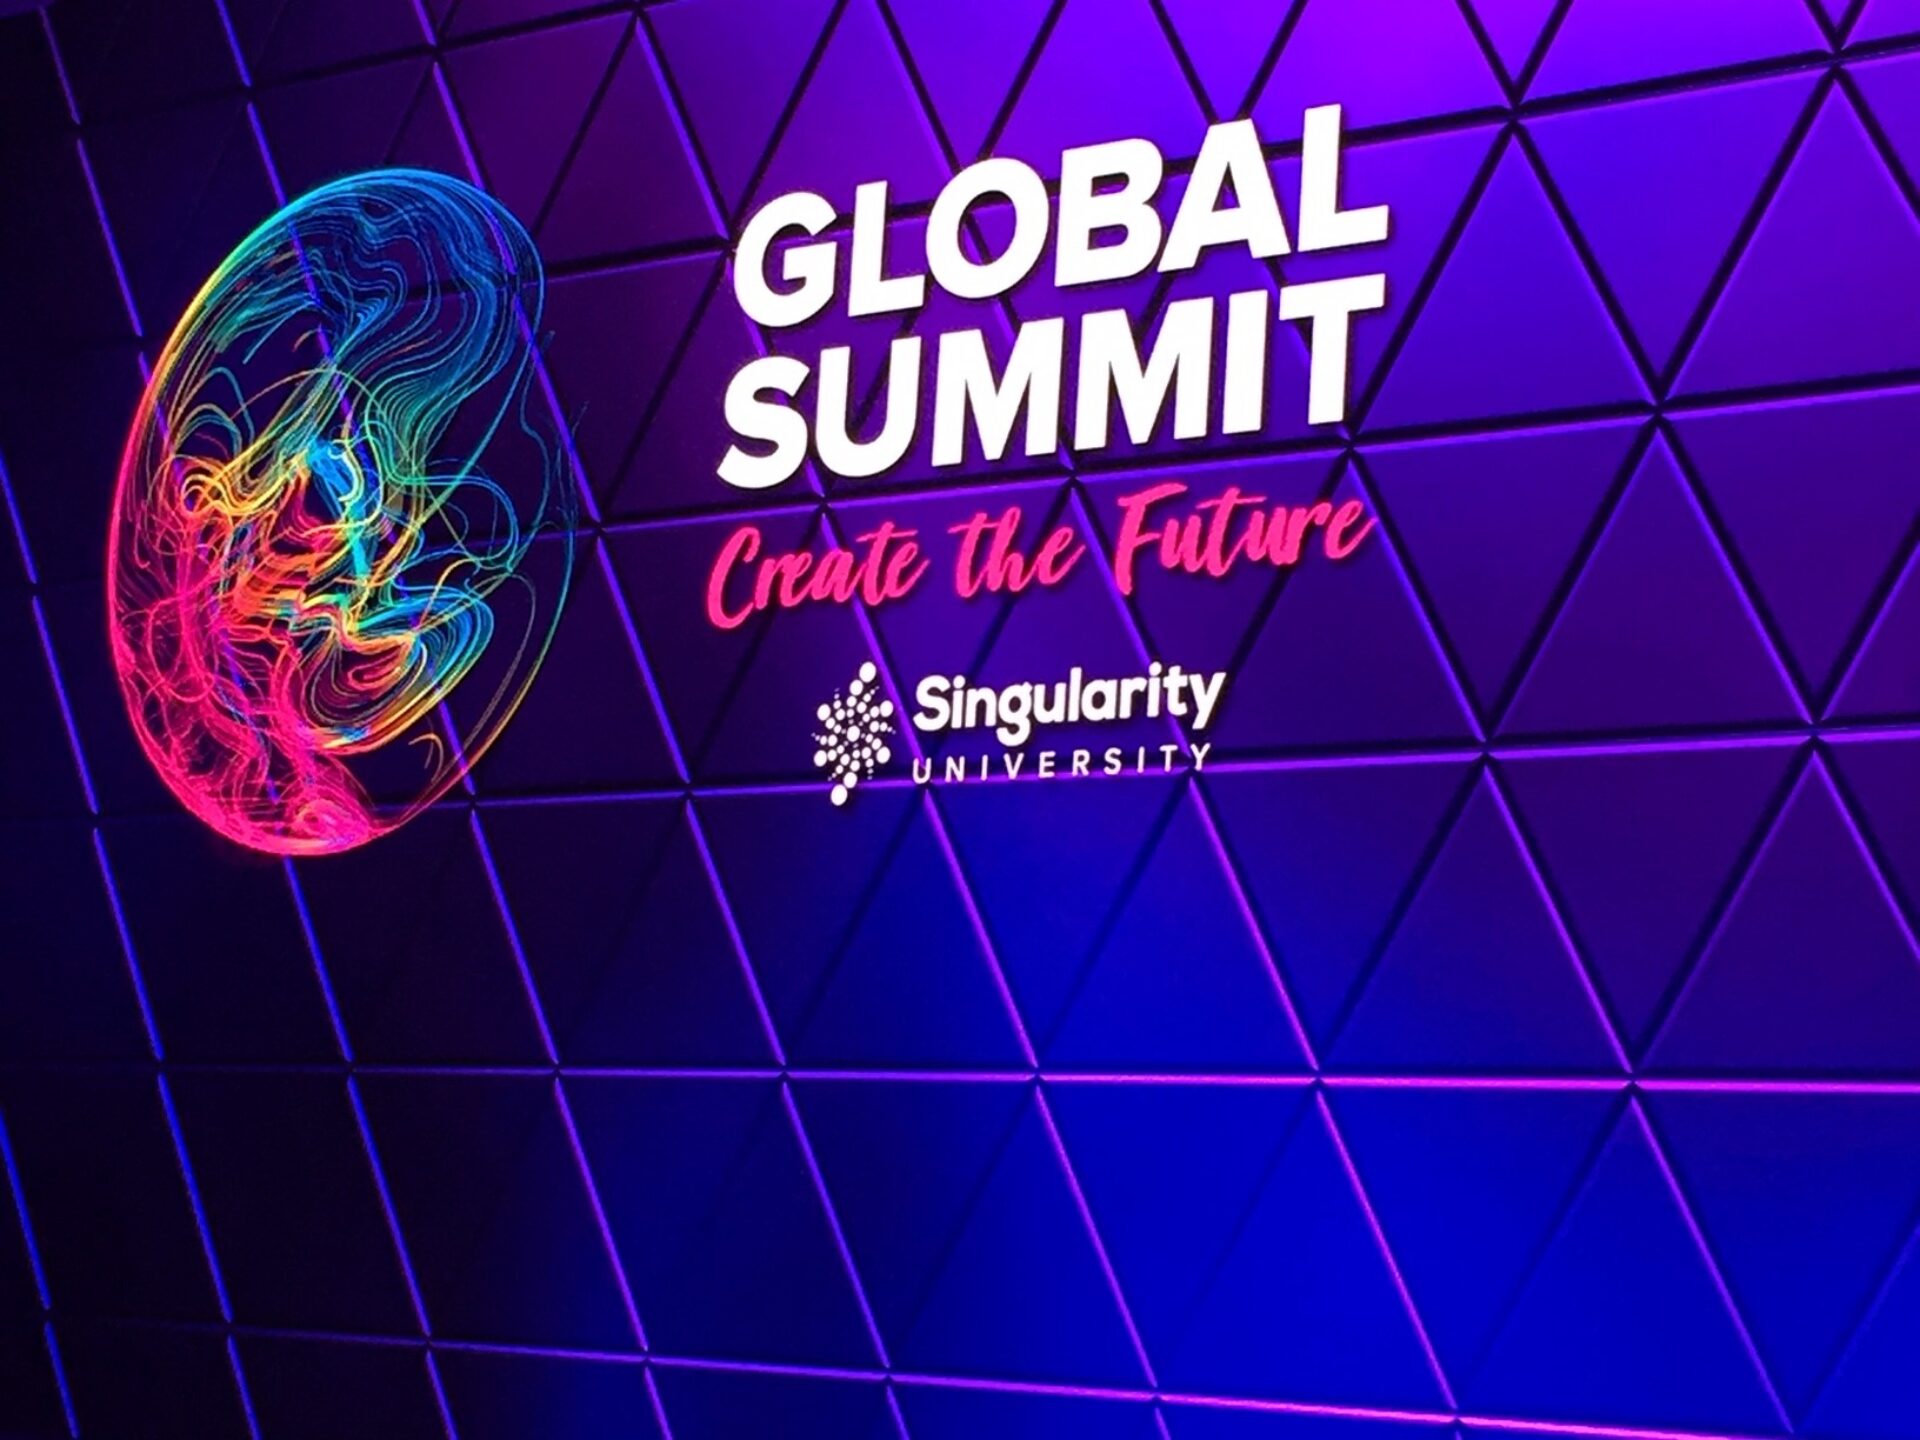 Singularity Summit Create the Future Keogh Consulting